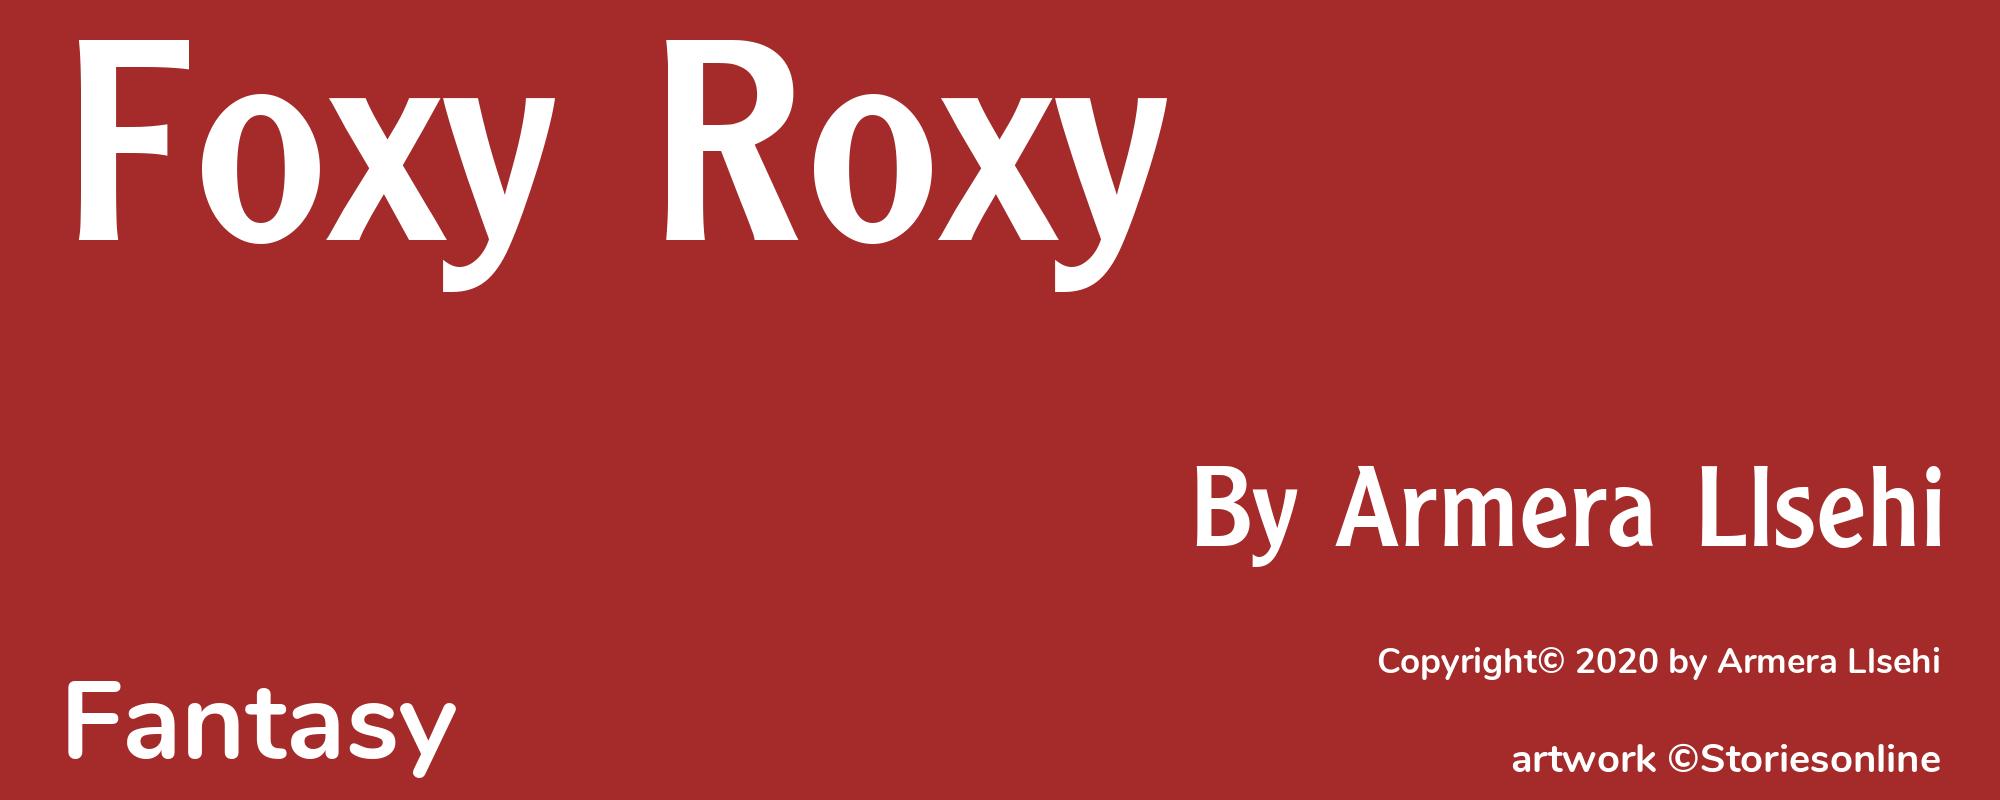 Foxy Roxy - Cover